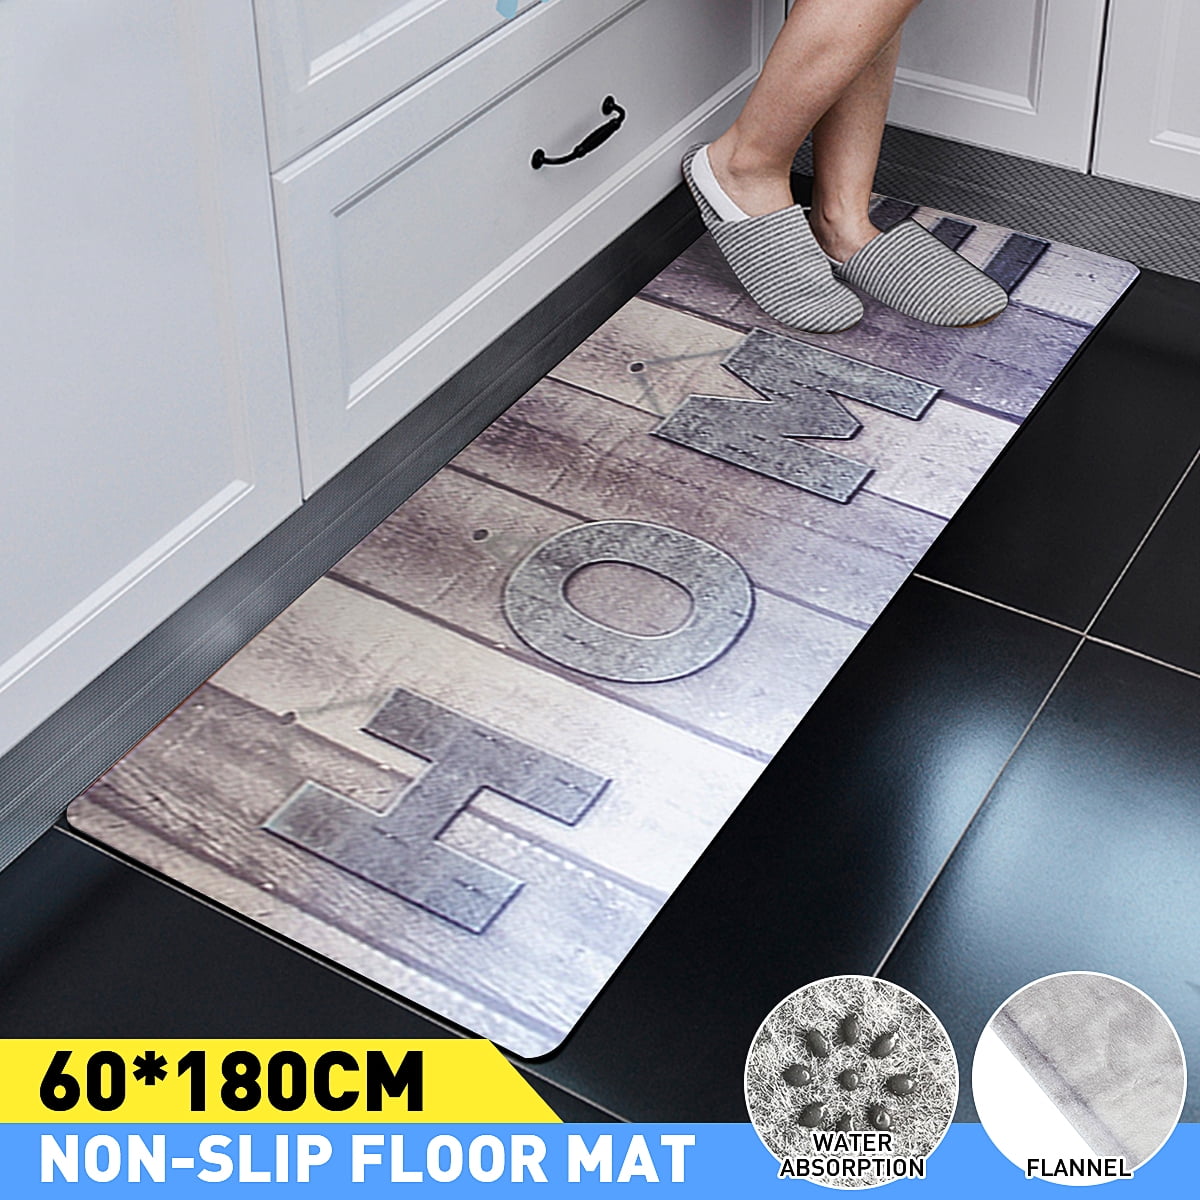 Details about   Floor Mat Runner Anti-slip Bedroom Bedside Bathroom Area Rugs Kids Crawl Mat 